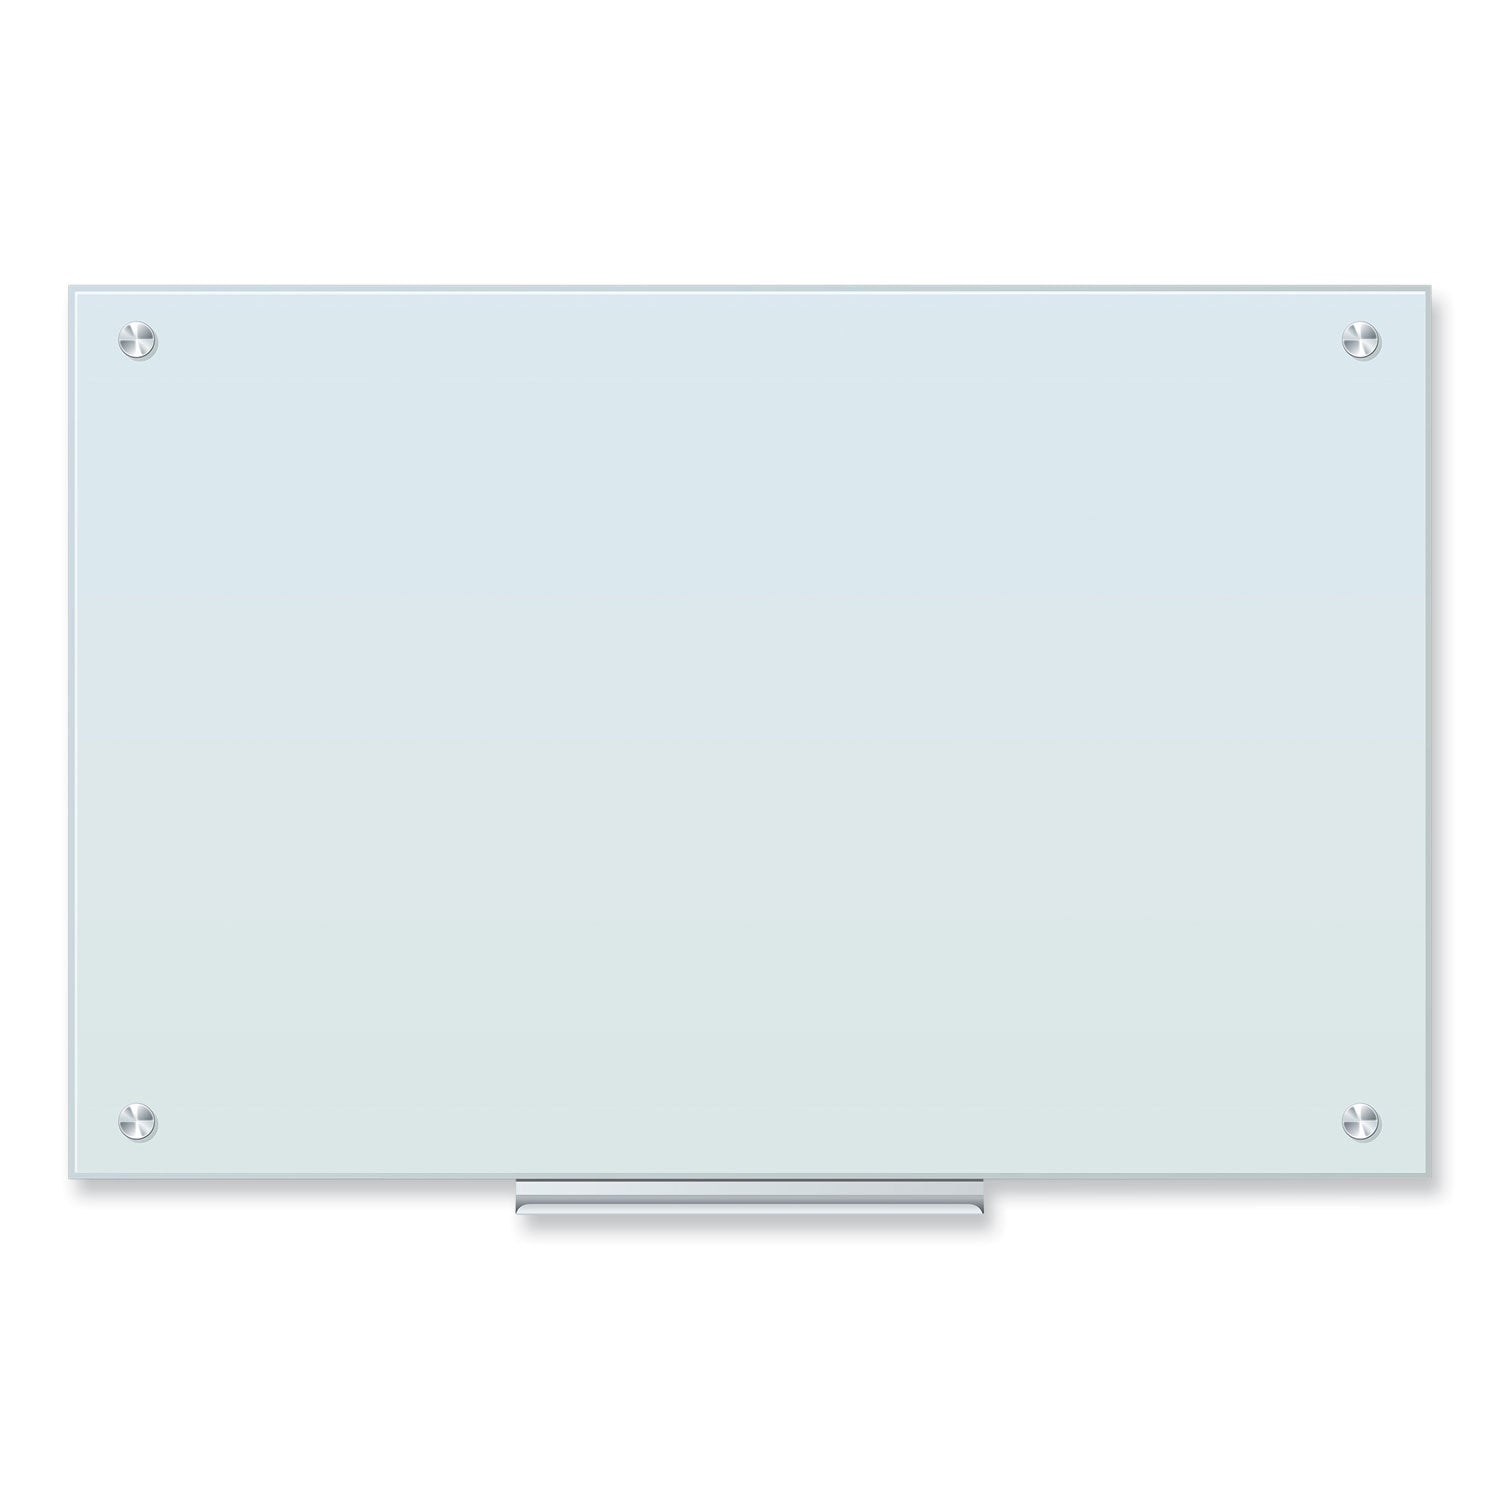 glass-dry-erase-board-35-x-23-white-surface_ubr2298u0001 - 1